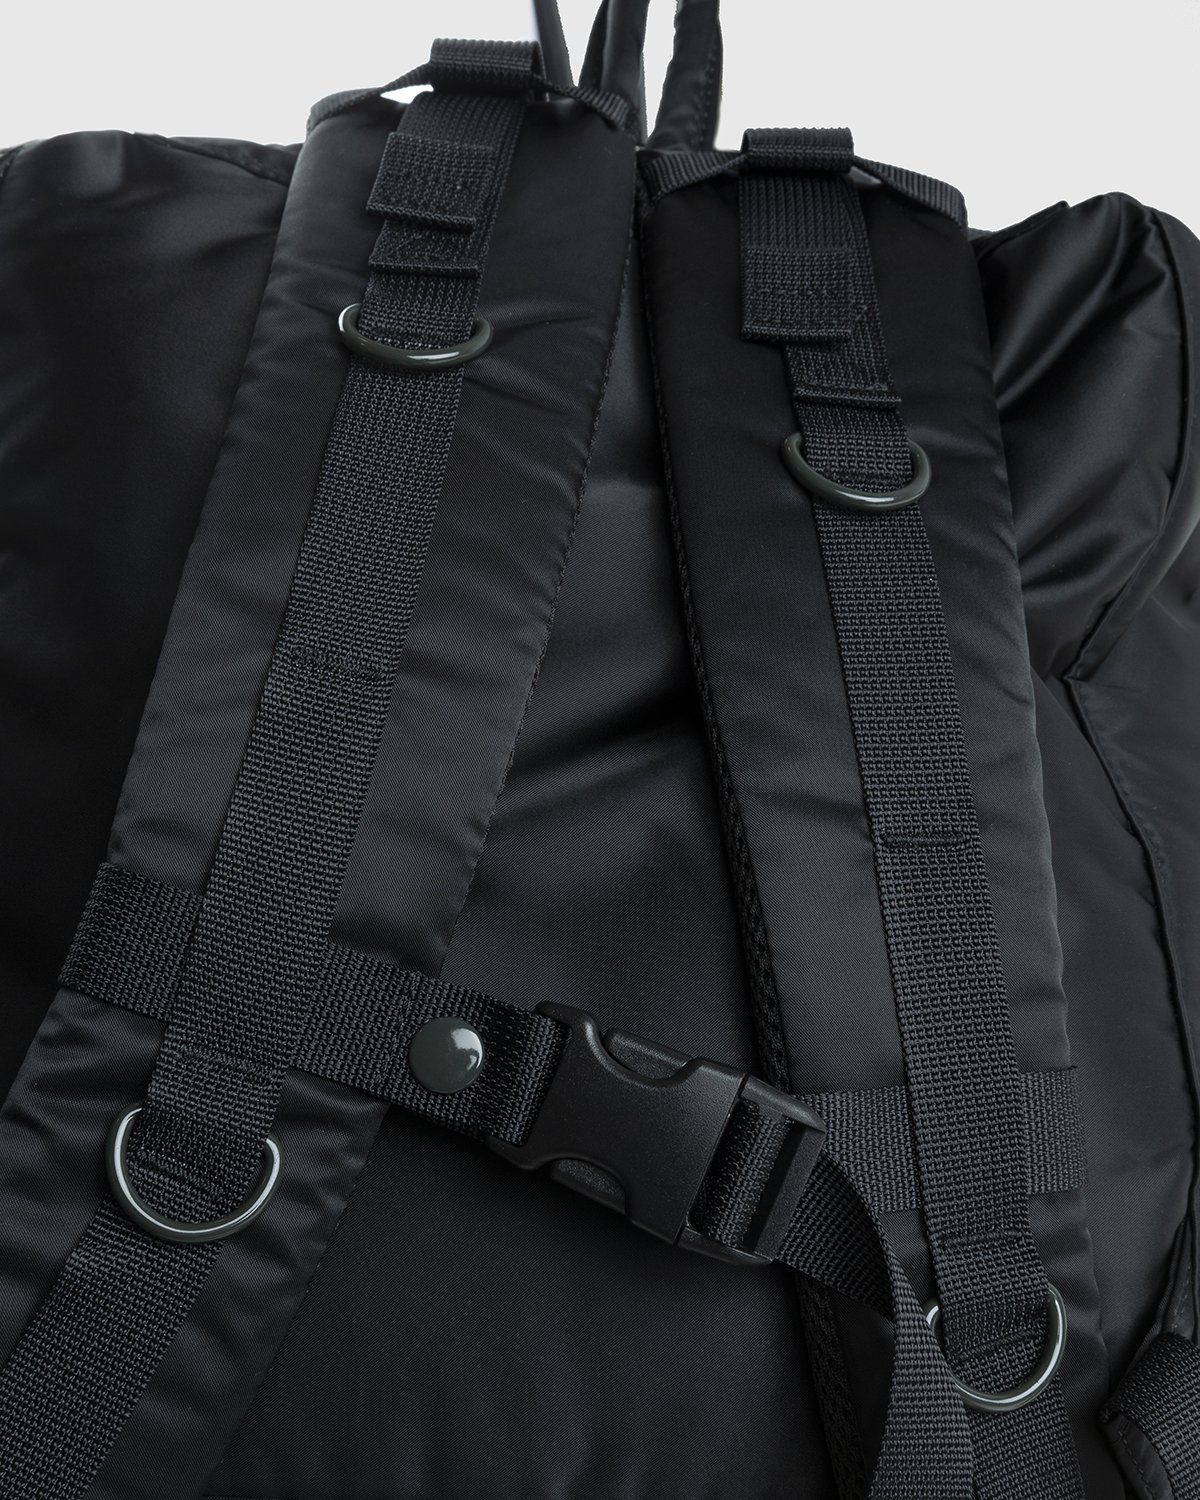 Porter-Yoshida & Co. - Rucksack Black - Accessories - Black - Image 6